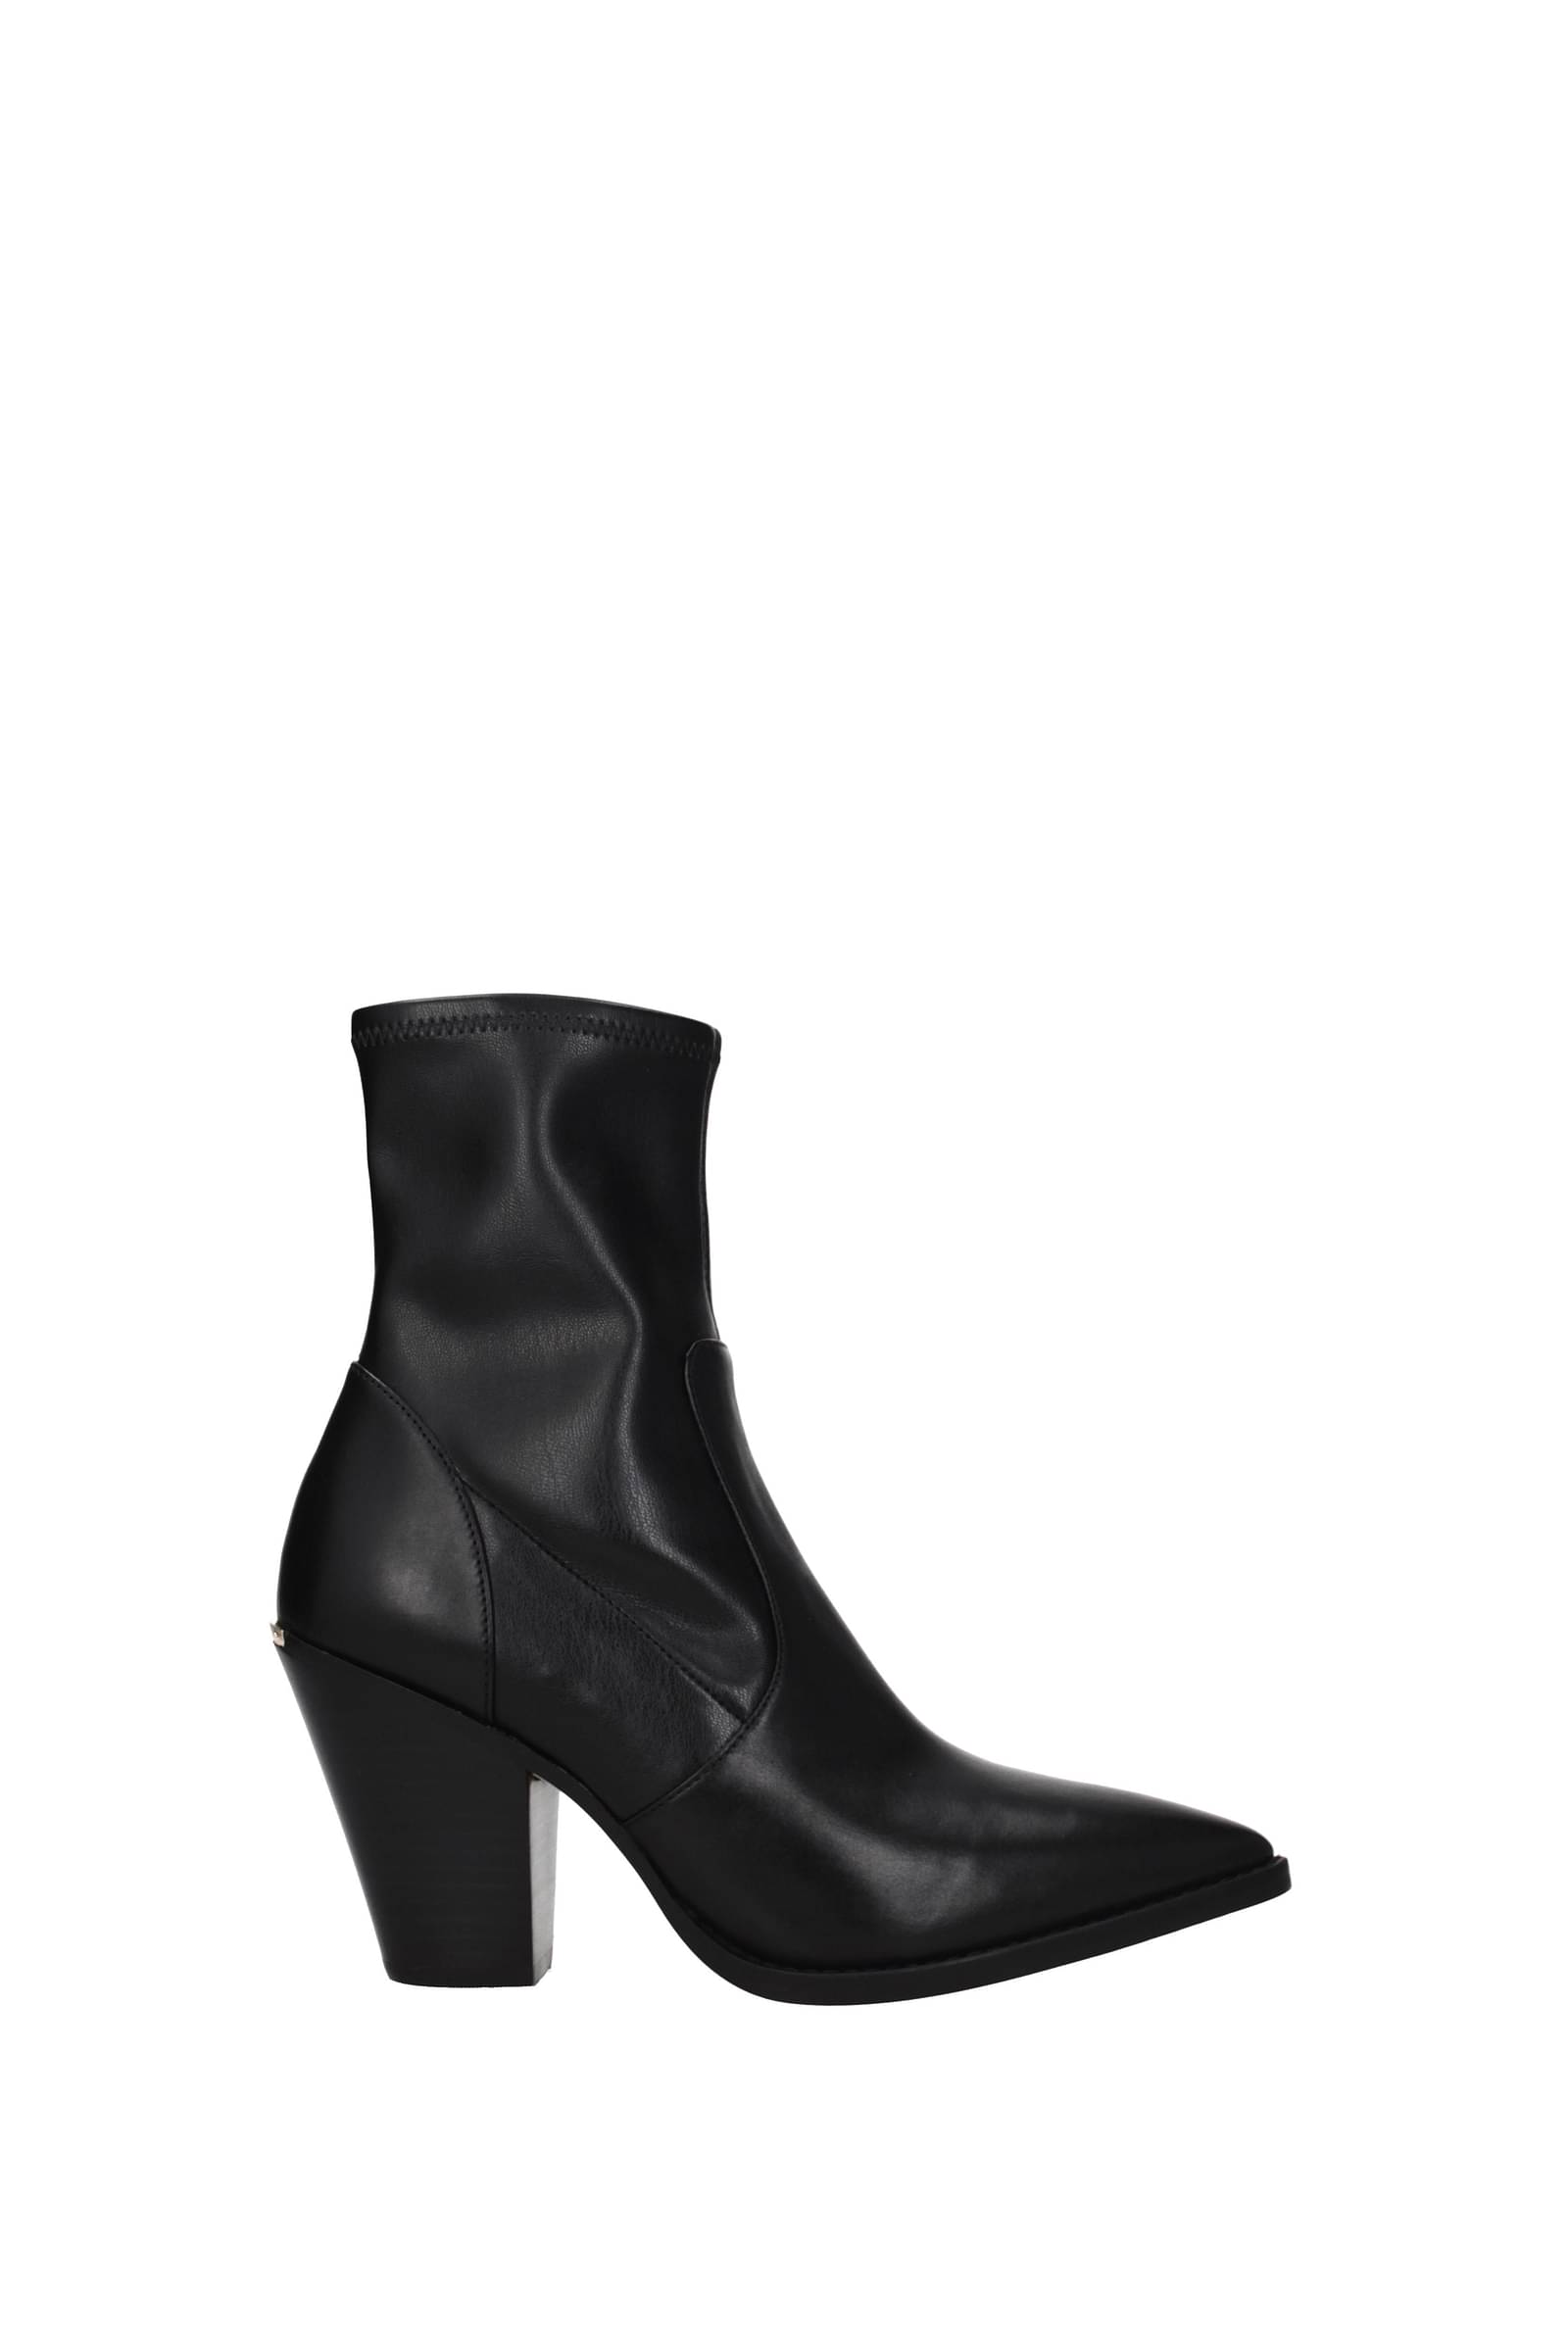 Michael Kors York Ankle Boots in Black Leather ref696912  Joli Closet